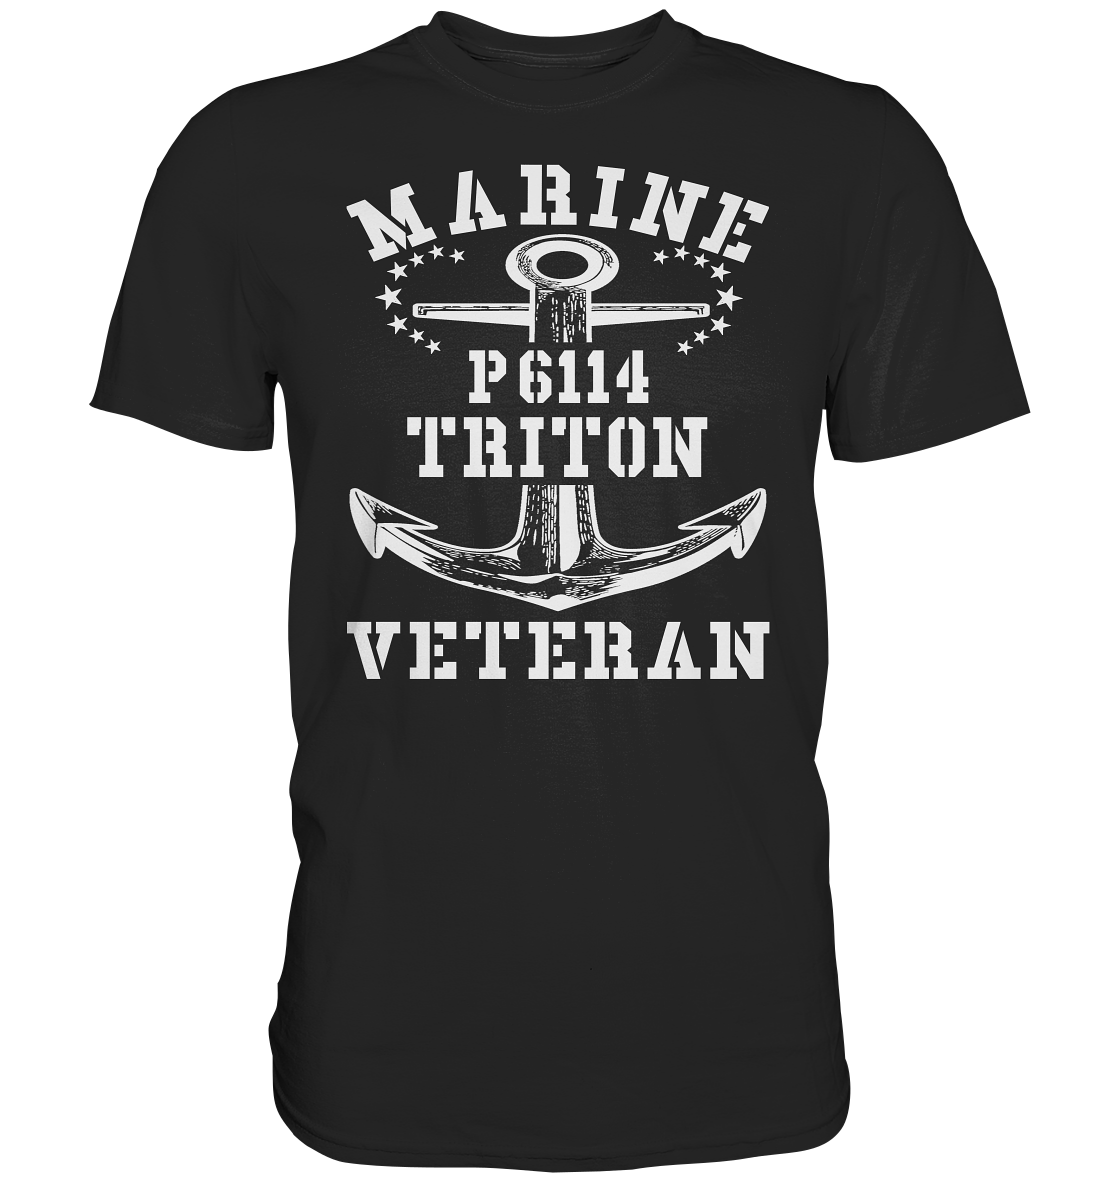 U-Jagdboot P6114 TRITON Marine Veteran - Premium Shirt